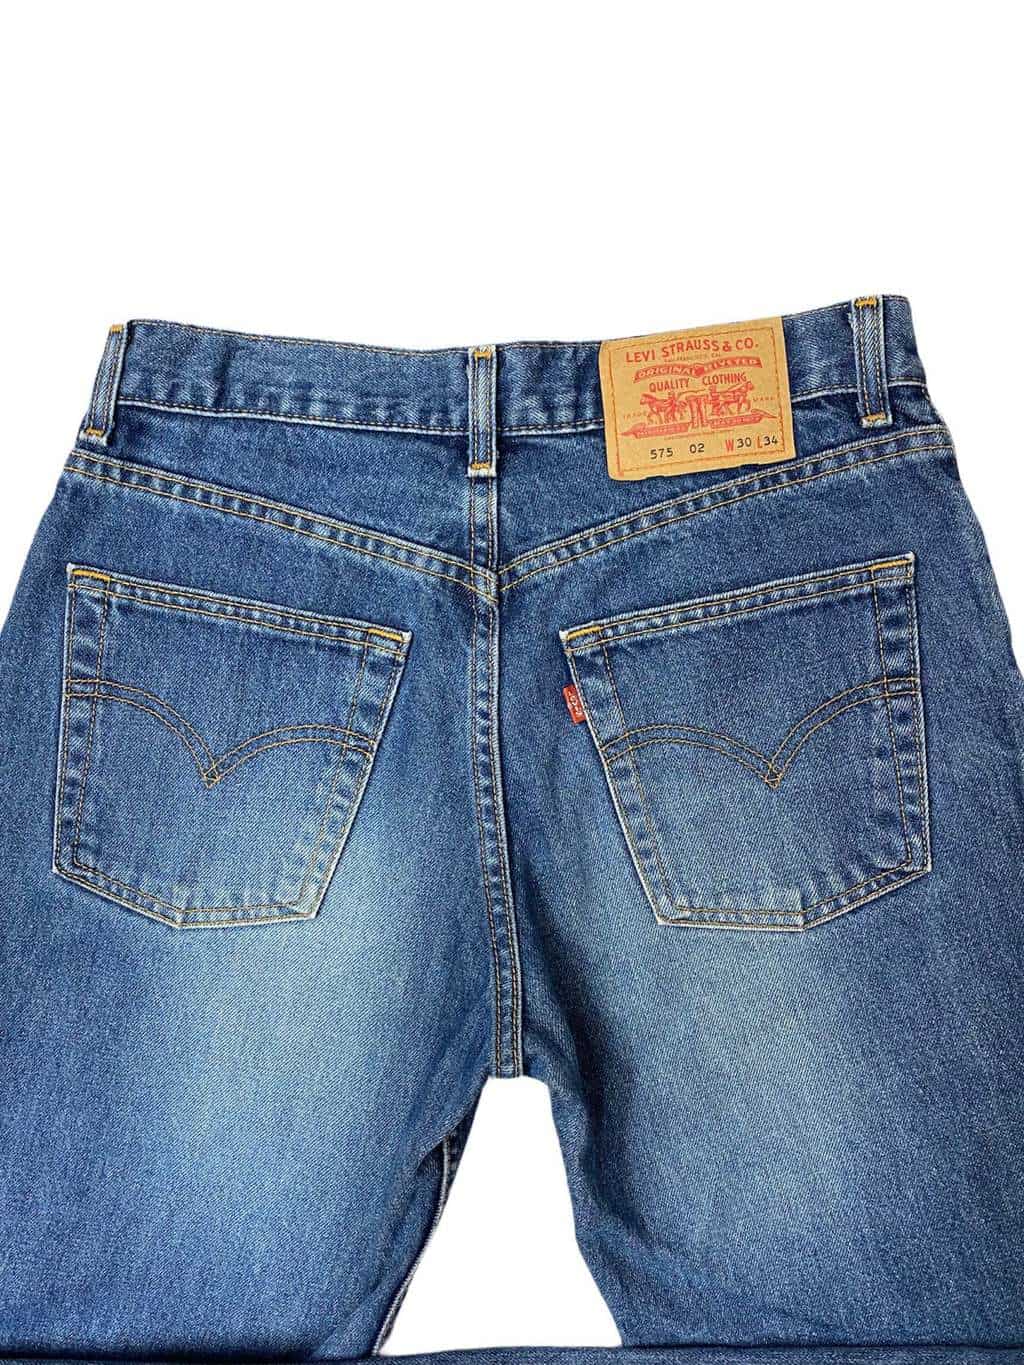 Vintage Levis 575 denim jeans in mid-blue wash, straight leg - W30 x L33 -  St Cyr Vintage